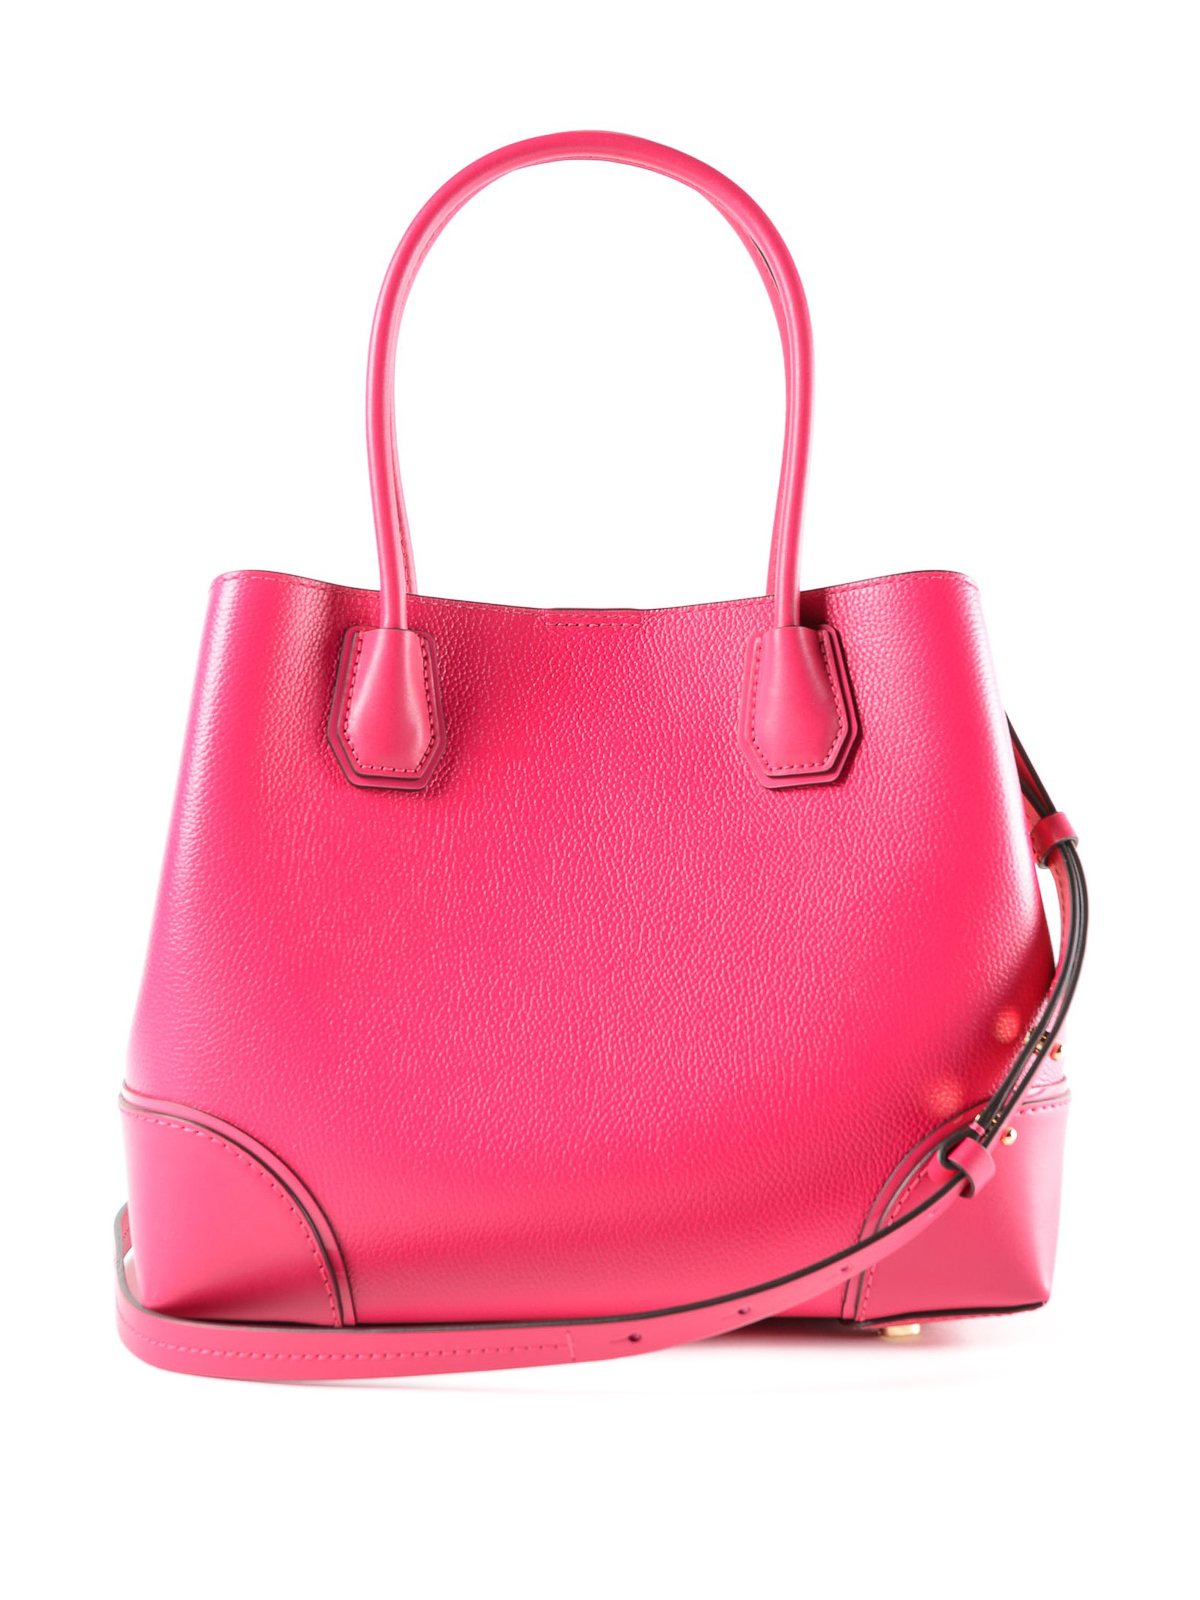 Amazoncom Michael Kors Avril Large Top Zip Satchel Crossbody Bag MK Pink  Rose MK Leather  Clothing Shoes  Jewelry